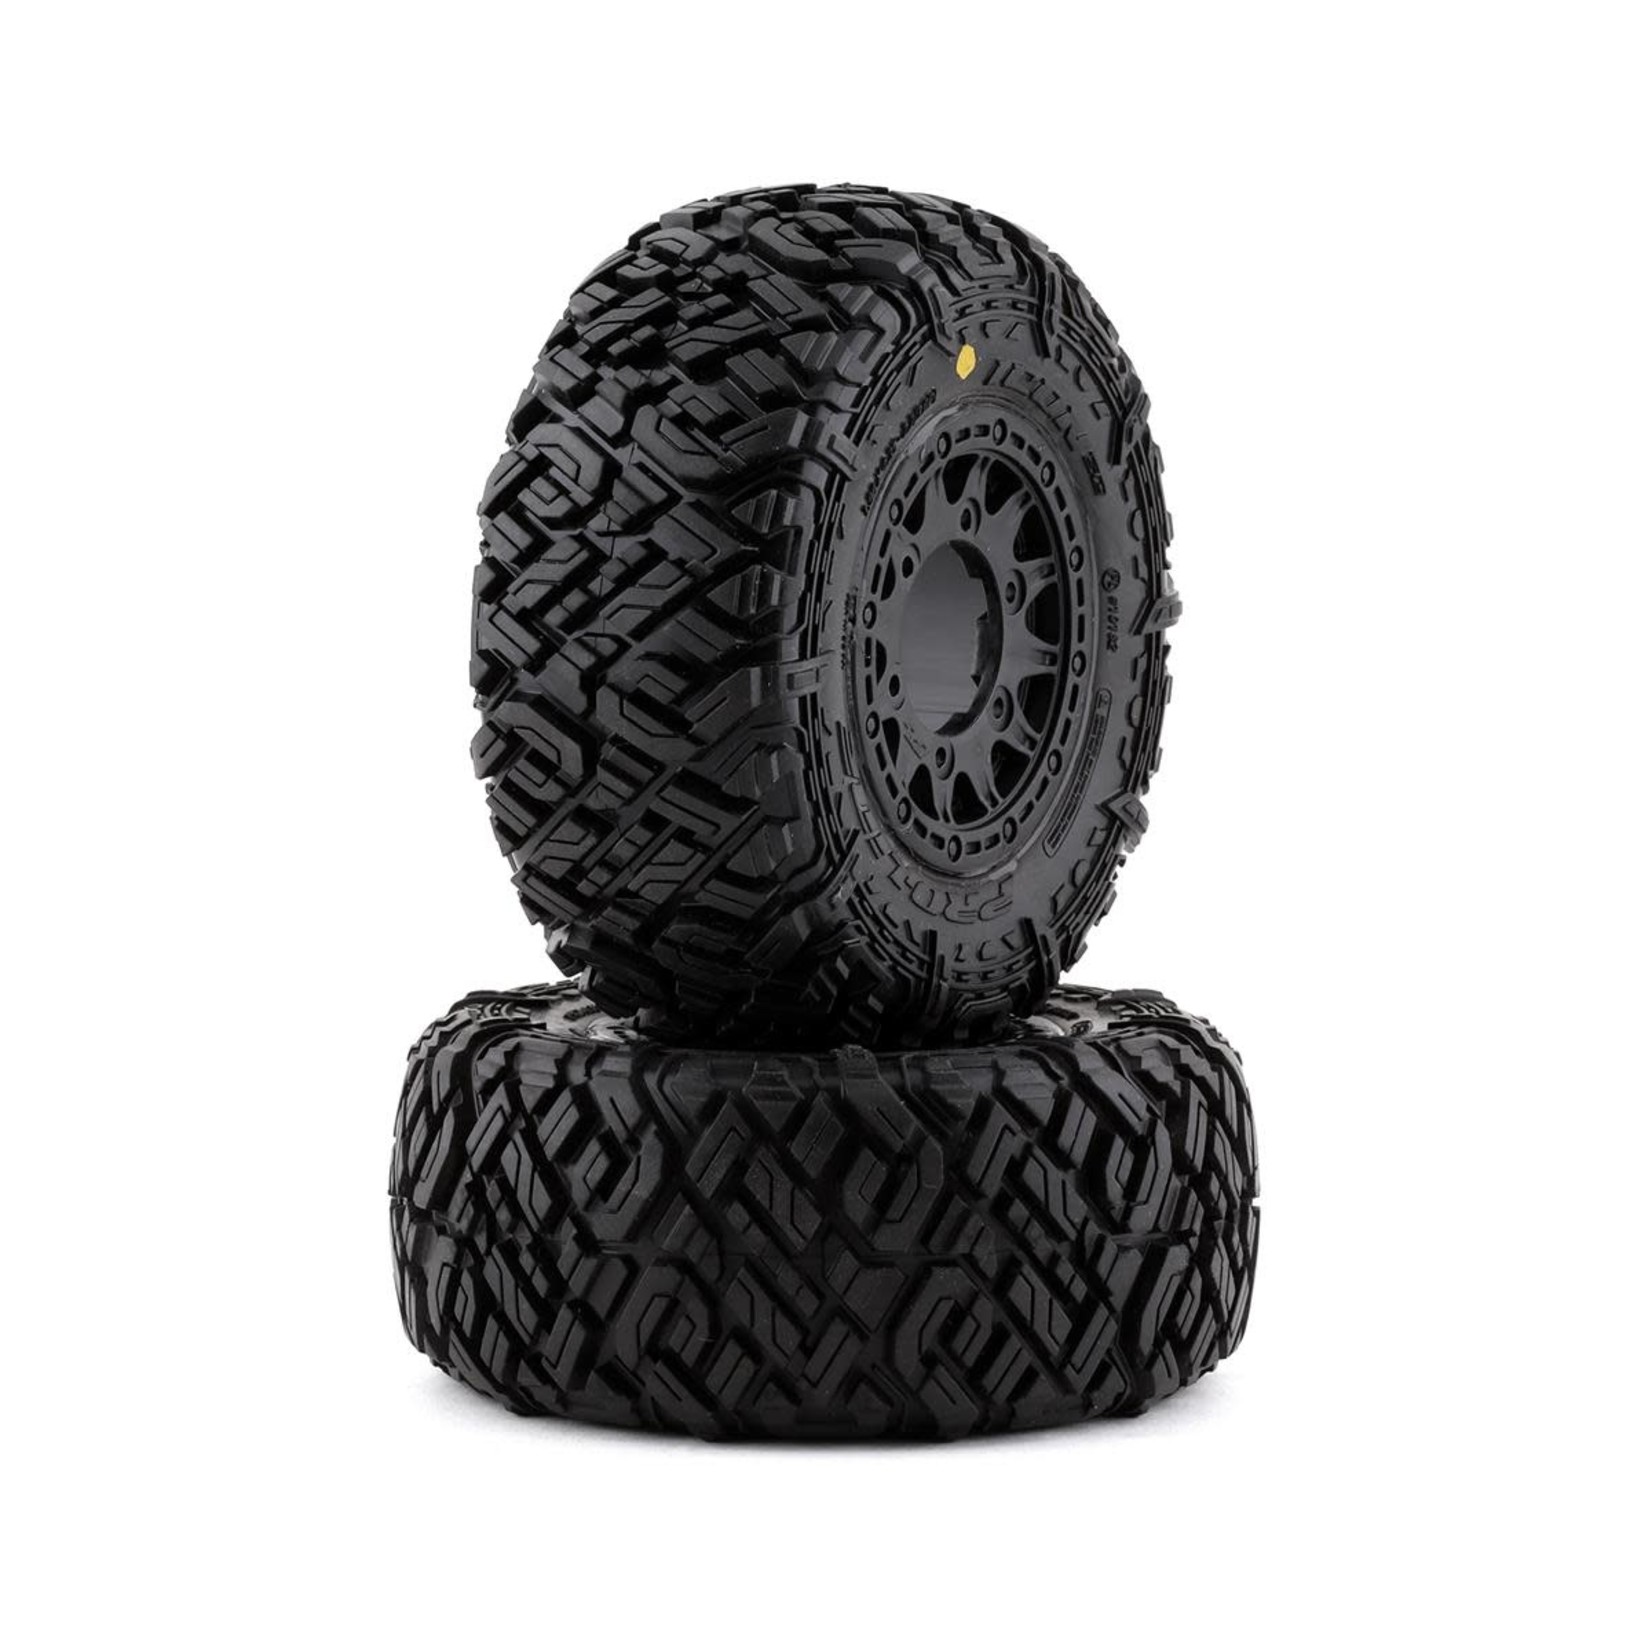 Pro-Line Pro-Line Icon SC Pre-Mounted Tires w/Raid Wheels (Black) (2) (M2) w/Removable 12mm Hex #10182-10